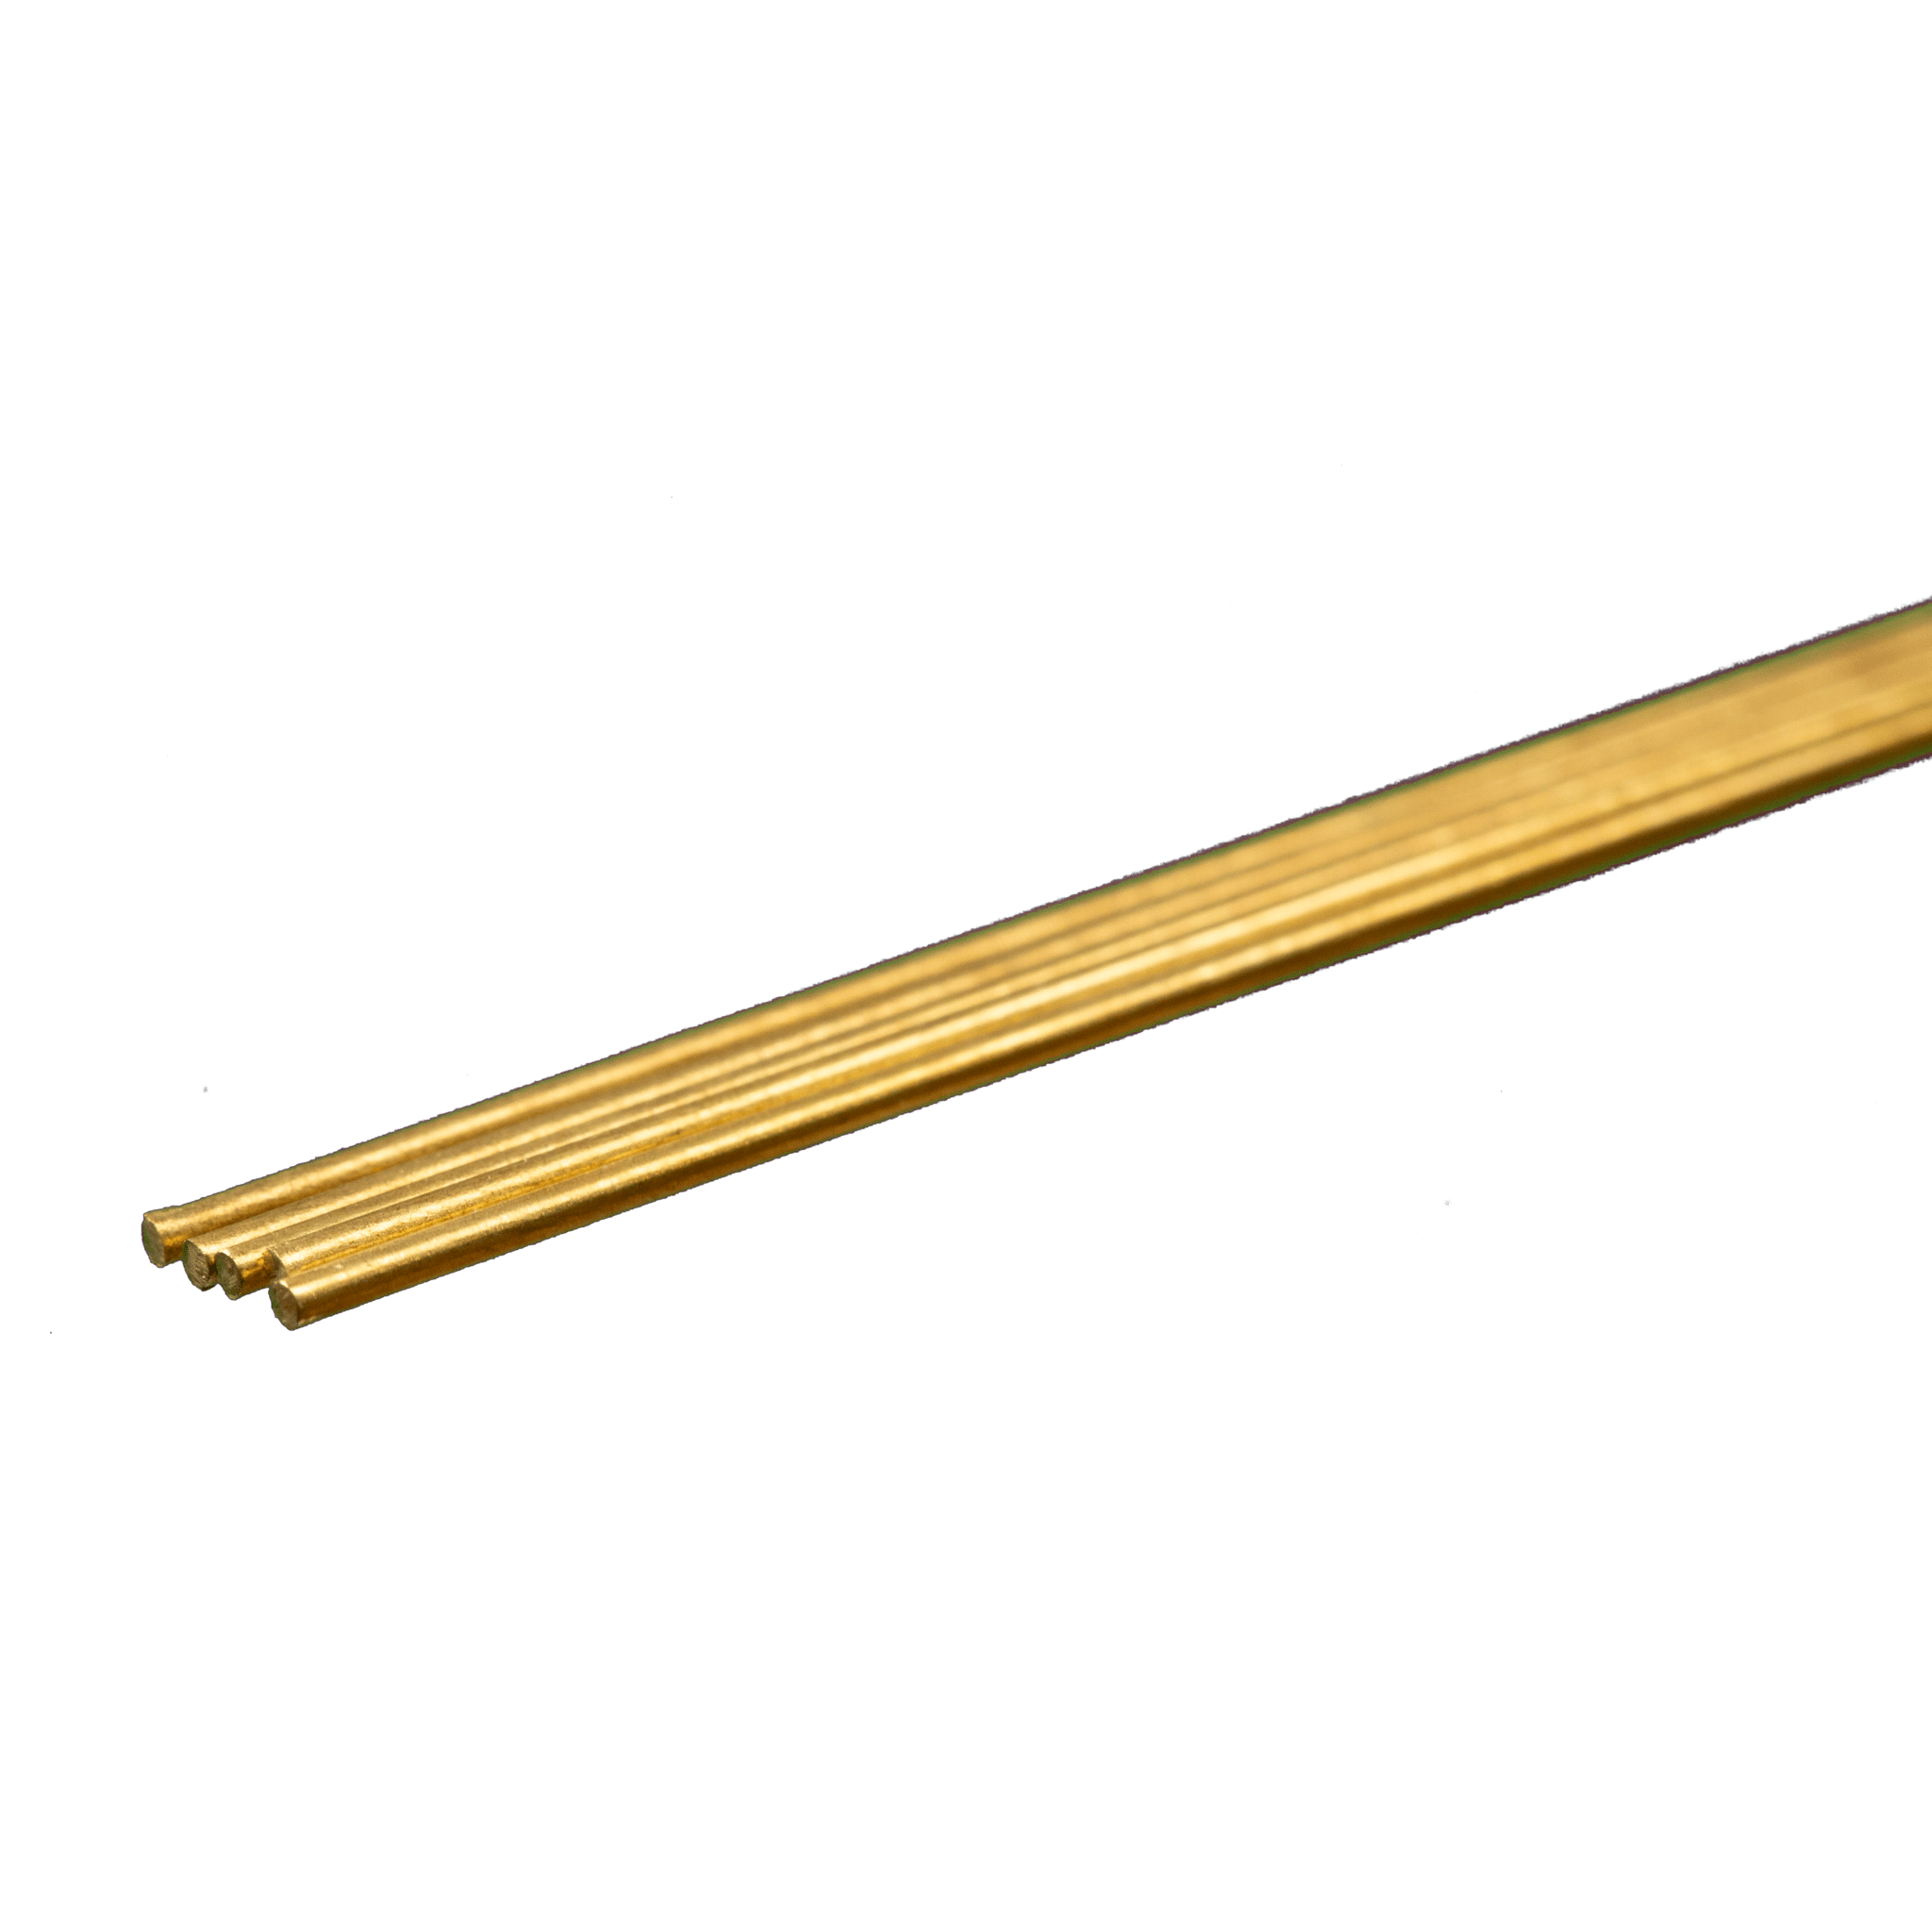 K&S Metals 8160 Round Brass Rod 1/32" OD x 12" Long (5 Pieces)